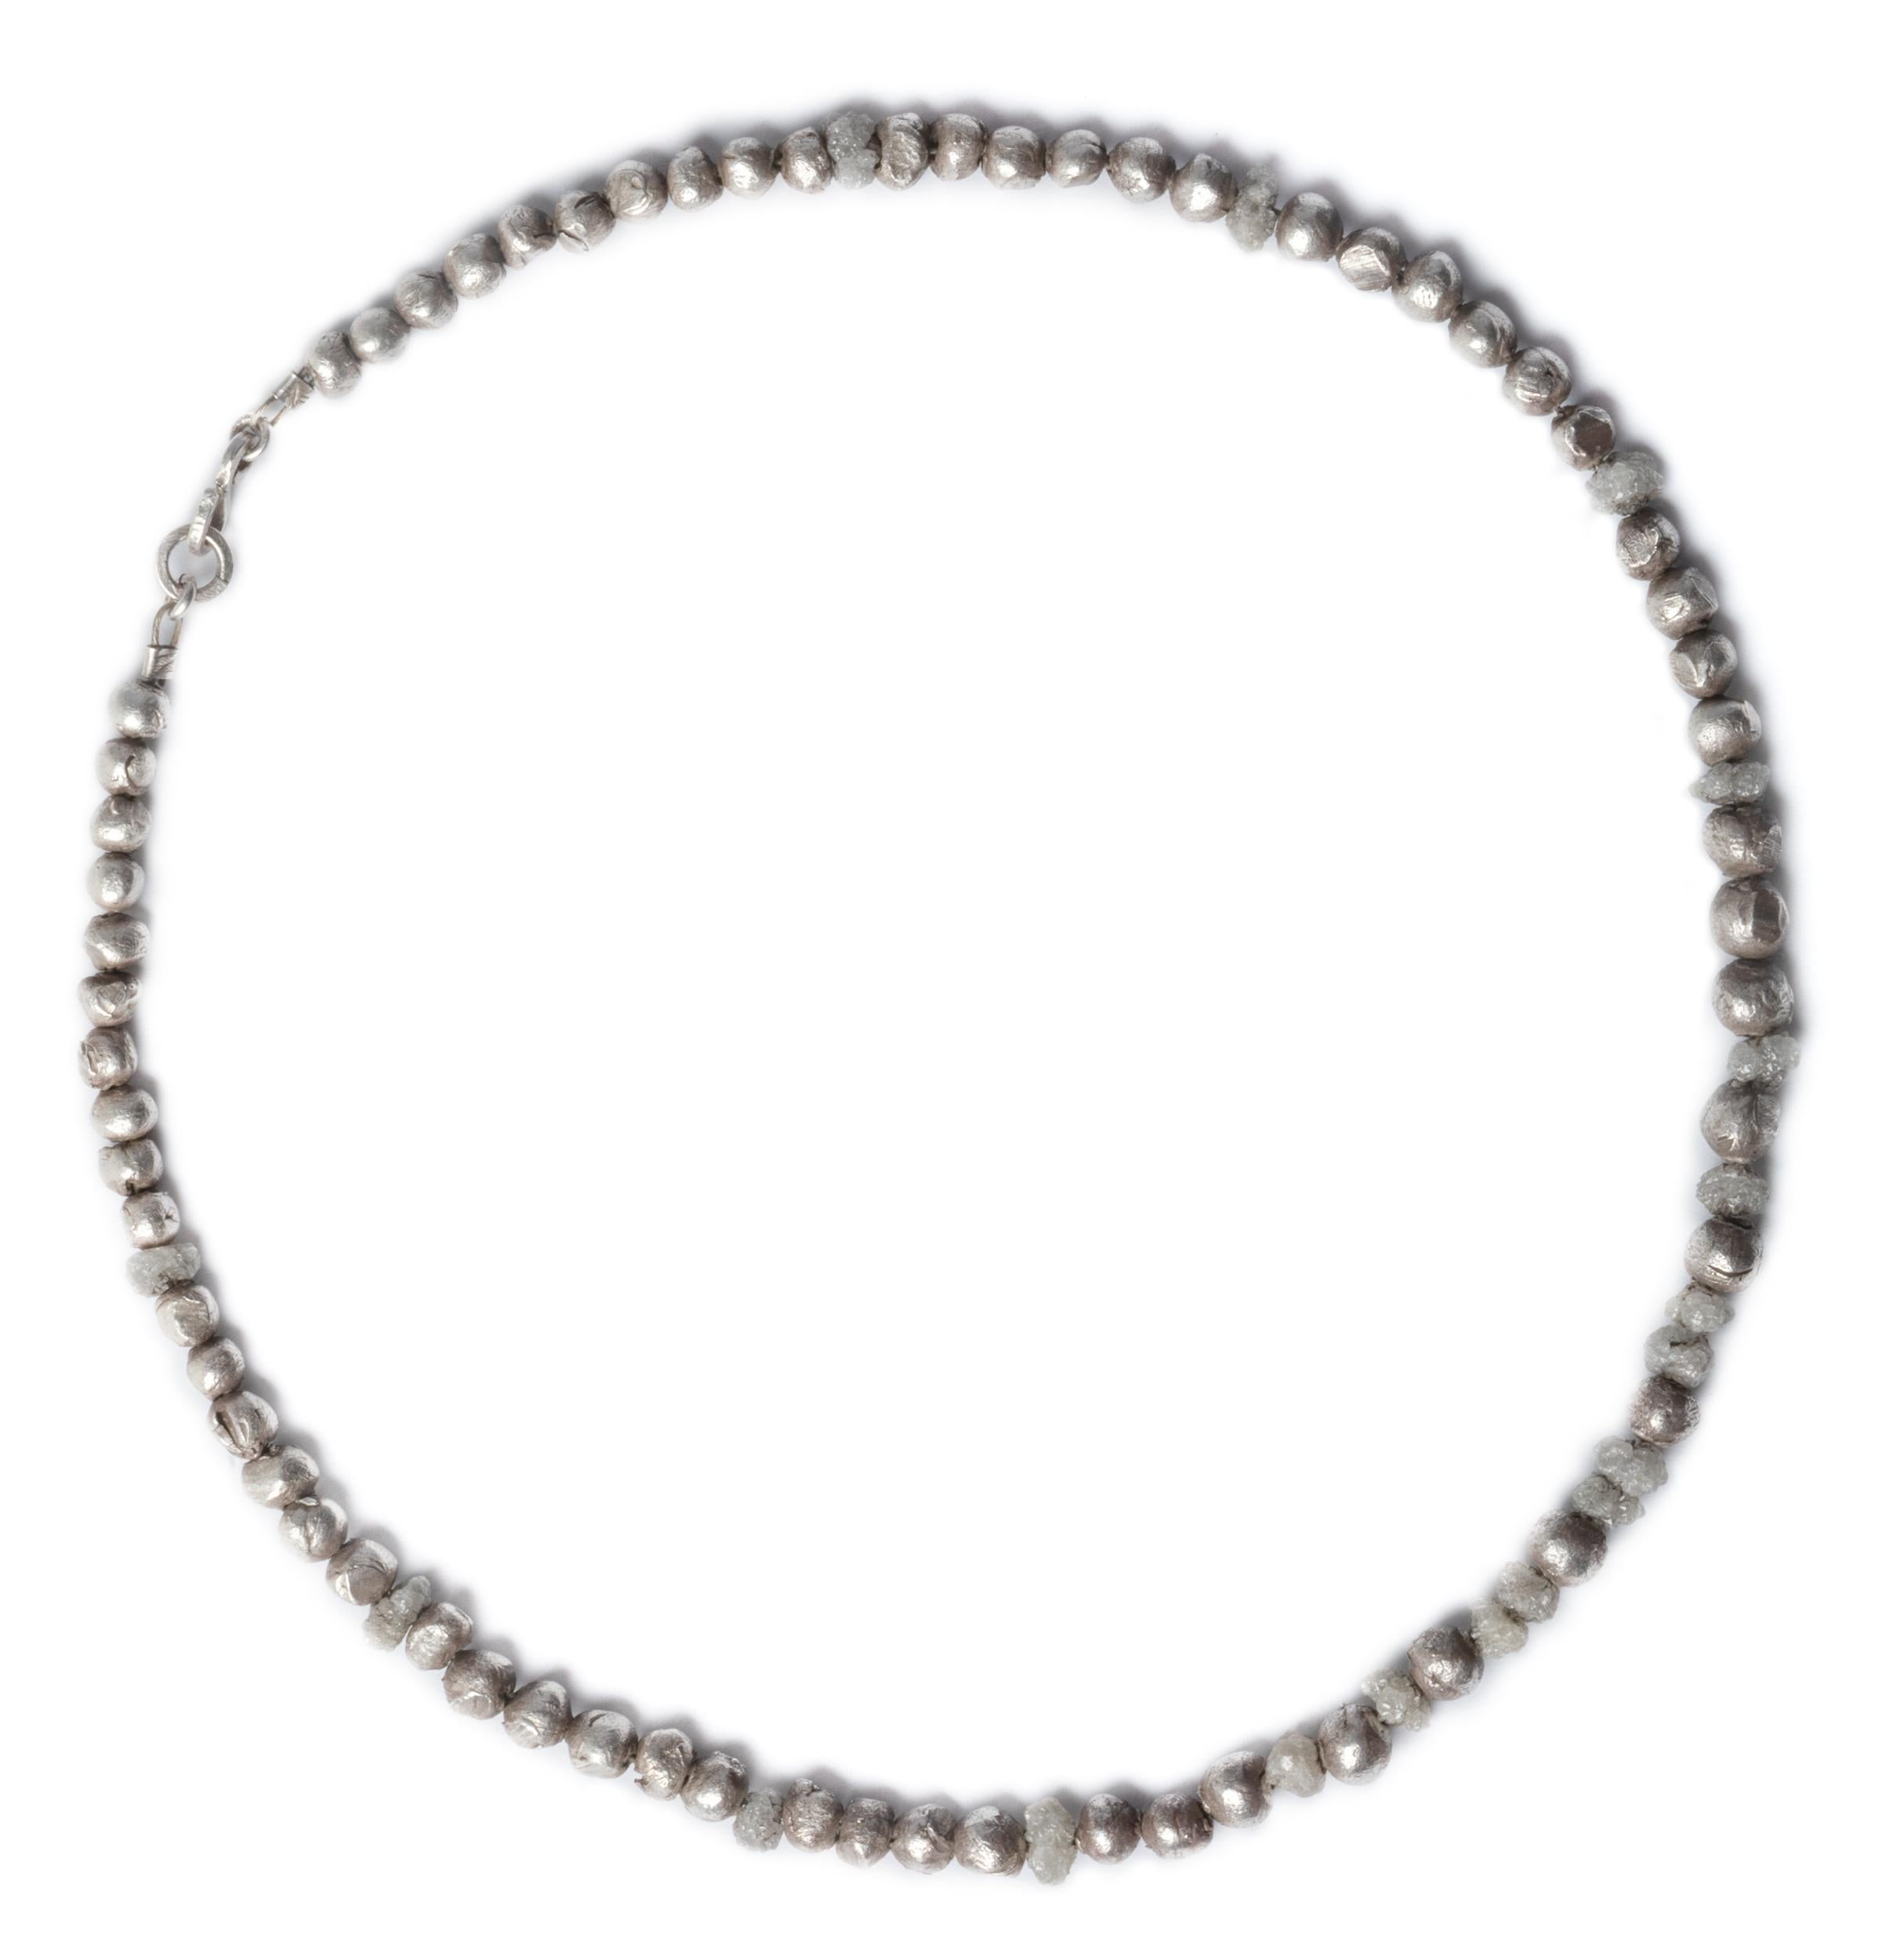 Women's or Men's Handmade Sterling Silver Bead and Diamond Choker / Bracelet by Embirikos For Sale